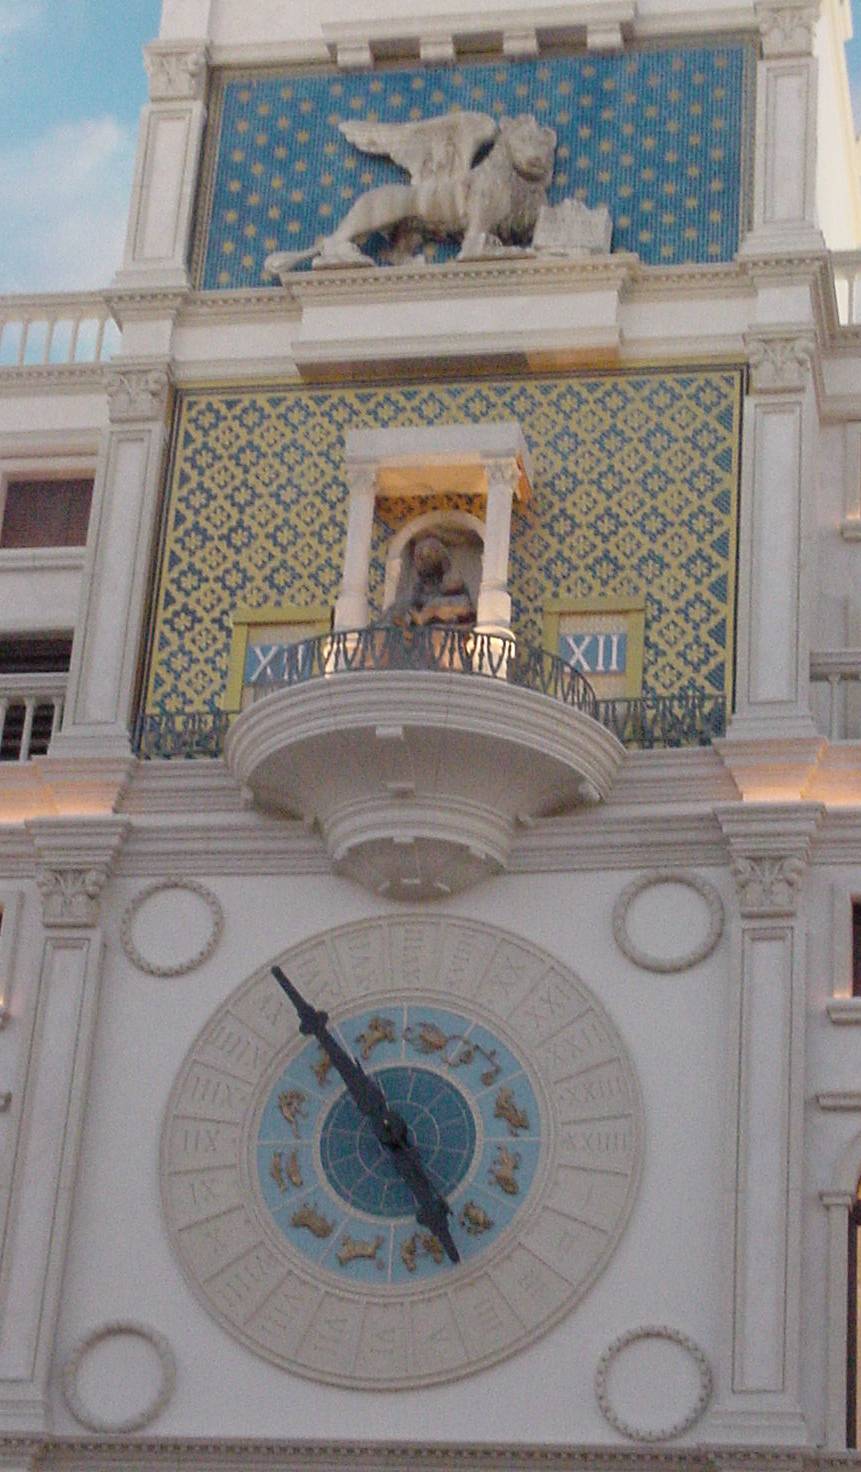 LV.Venetian.clock.jpg